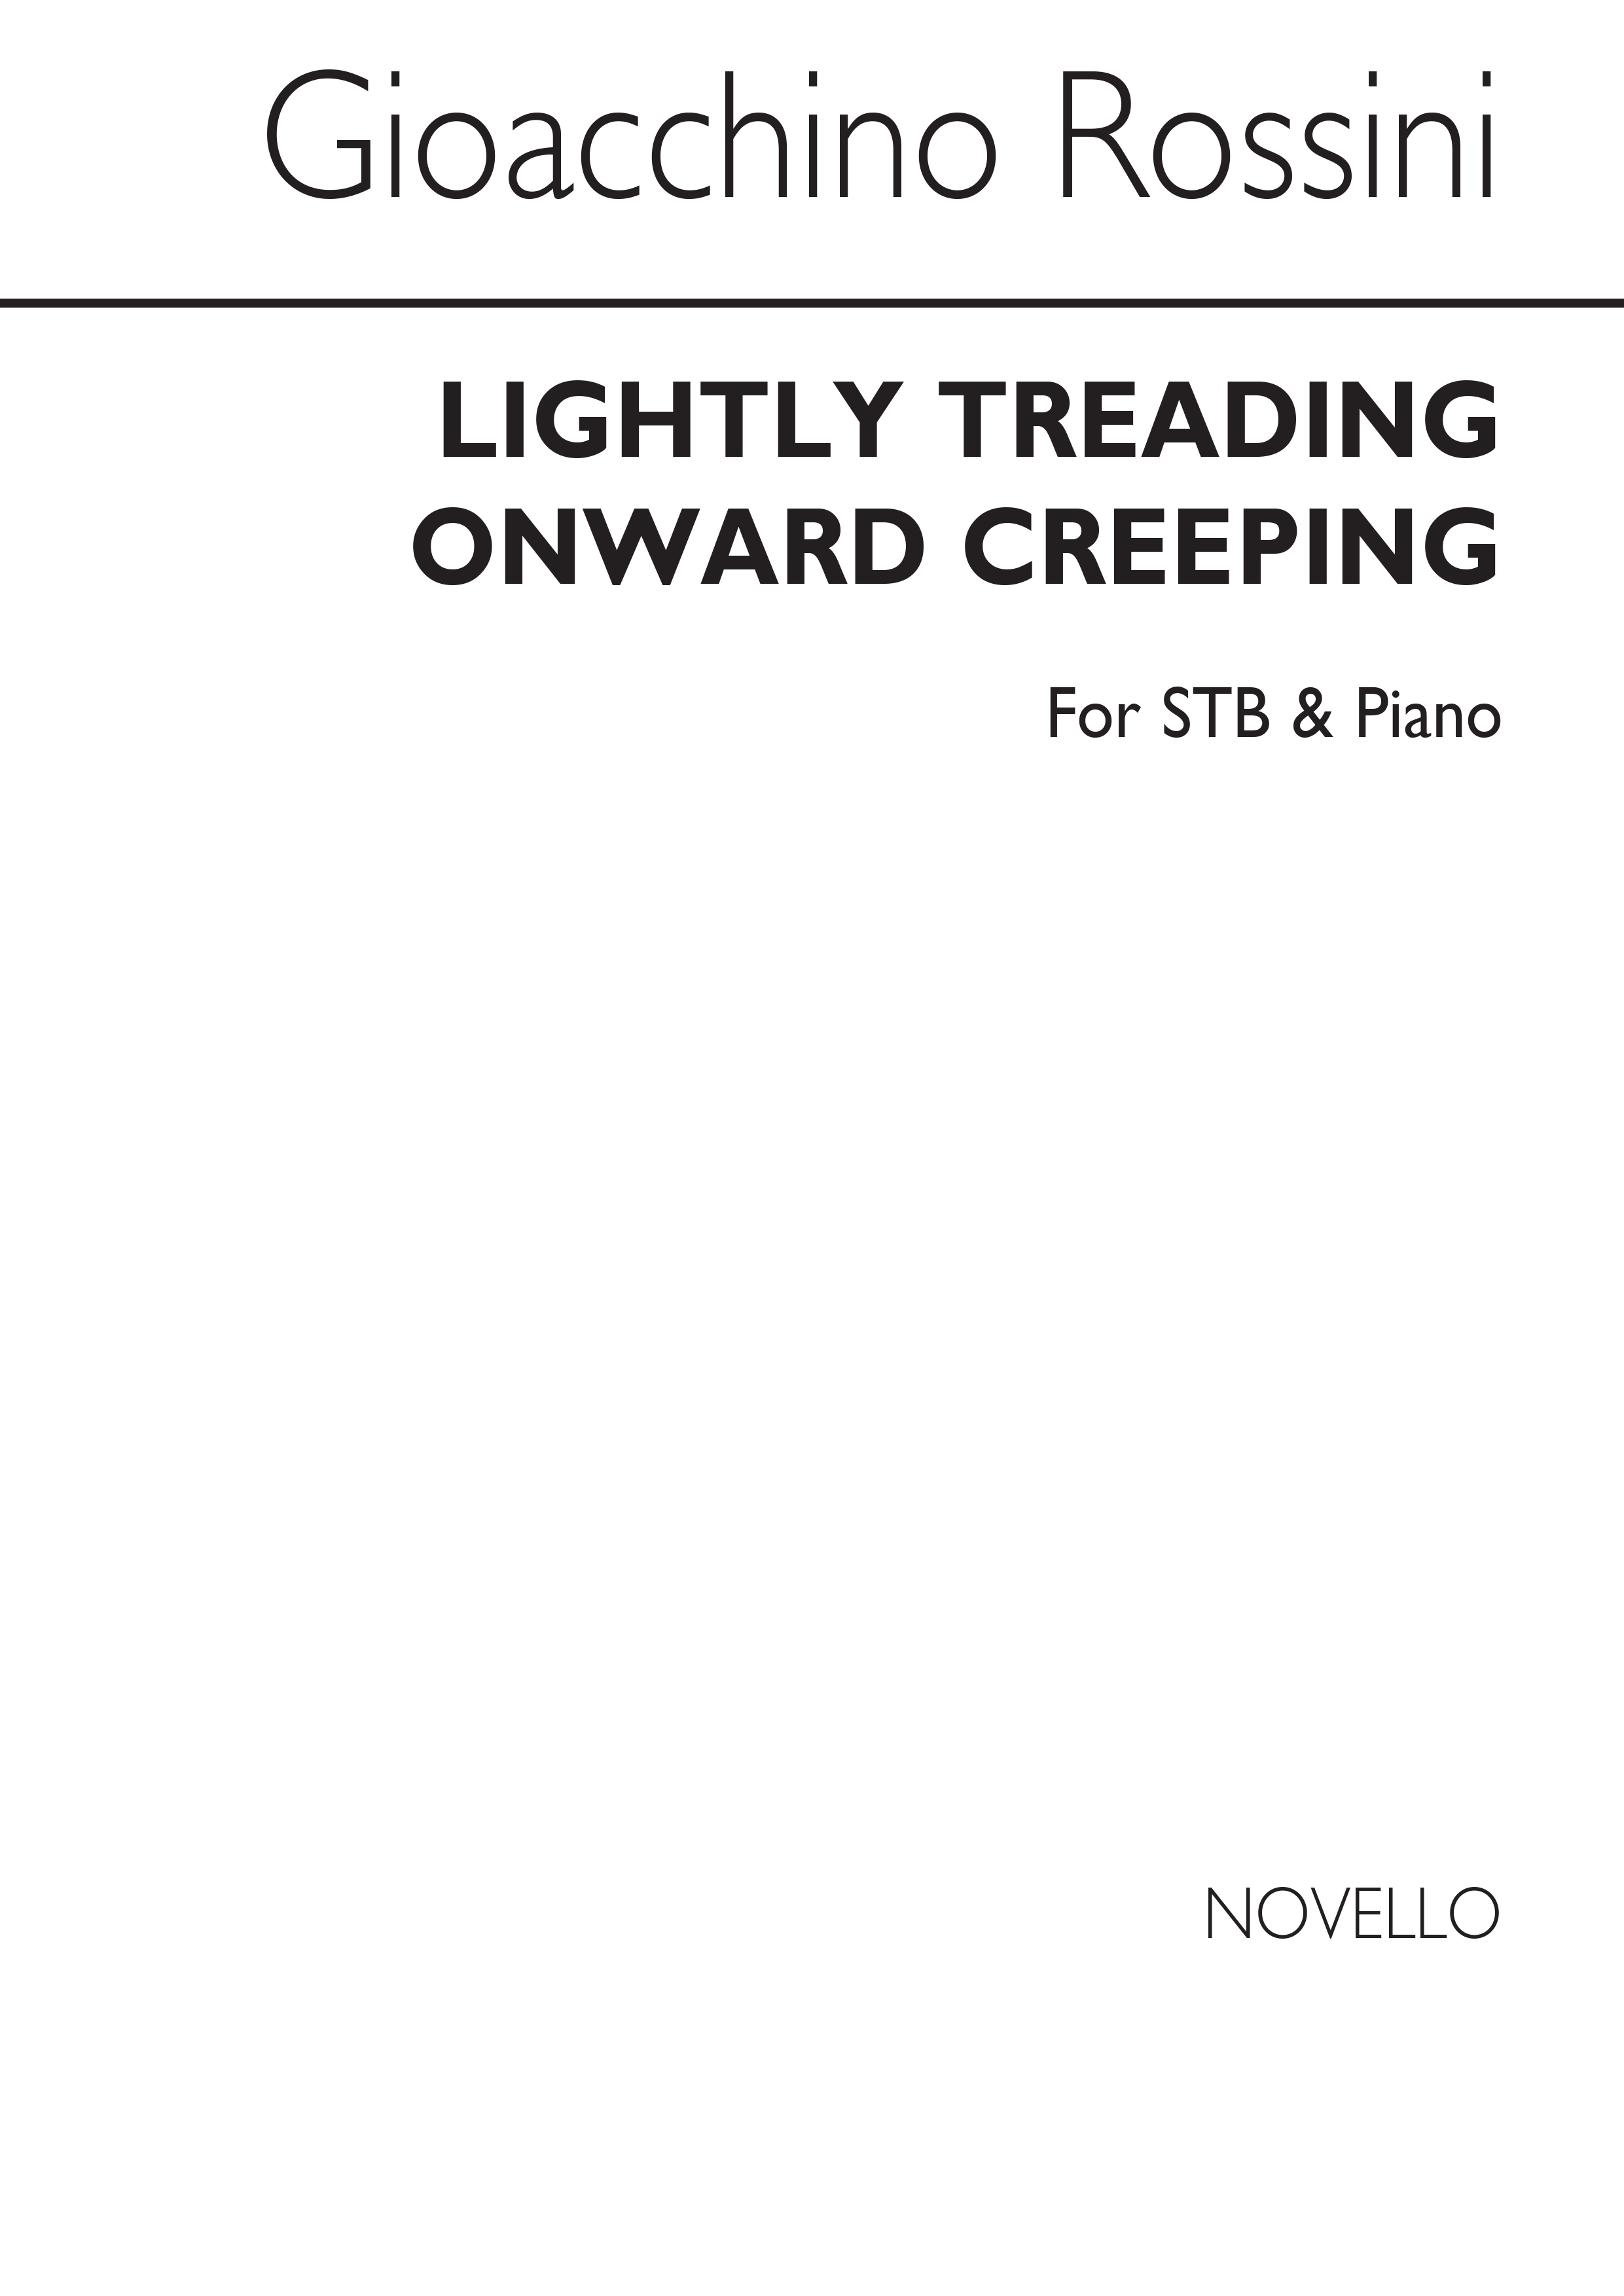 Gioacchino Rossini: Lightly Treading, Onward Creeping Stb/Piano